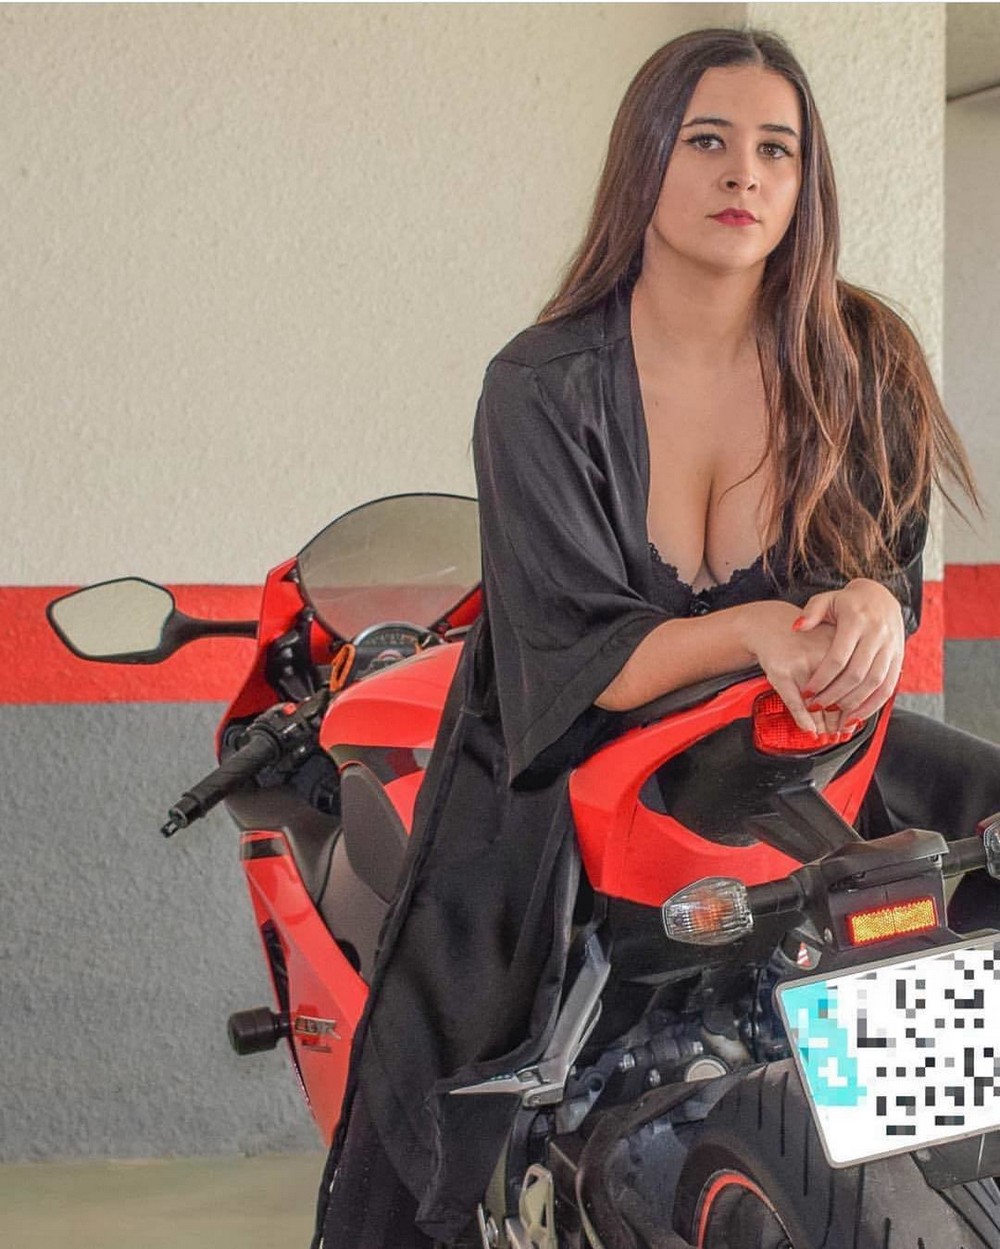 Красивые девушки и мотоциклы